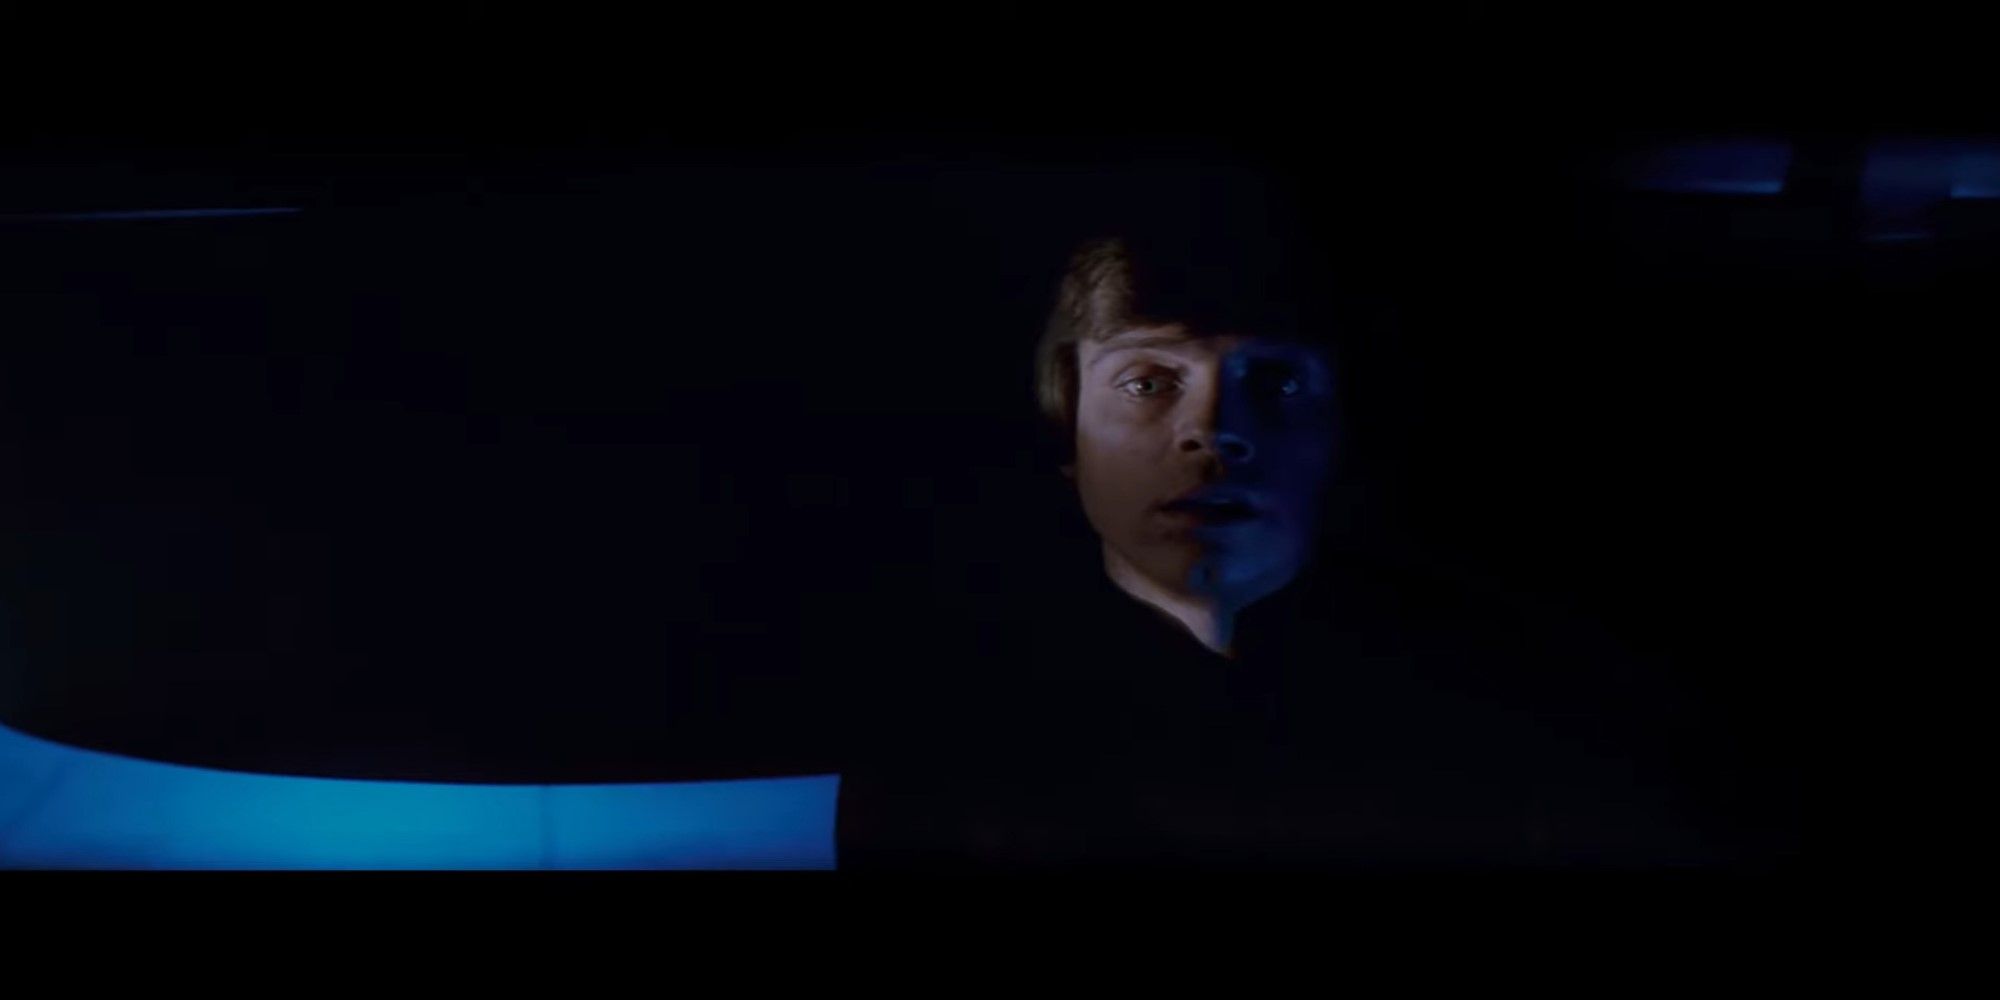 Luke Skywalker hiding from Darth Vader in Return of the Jedi.